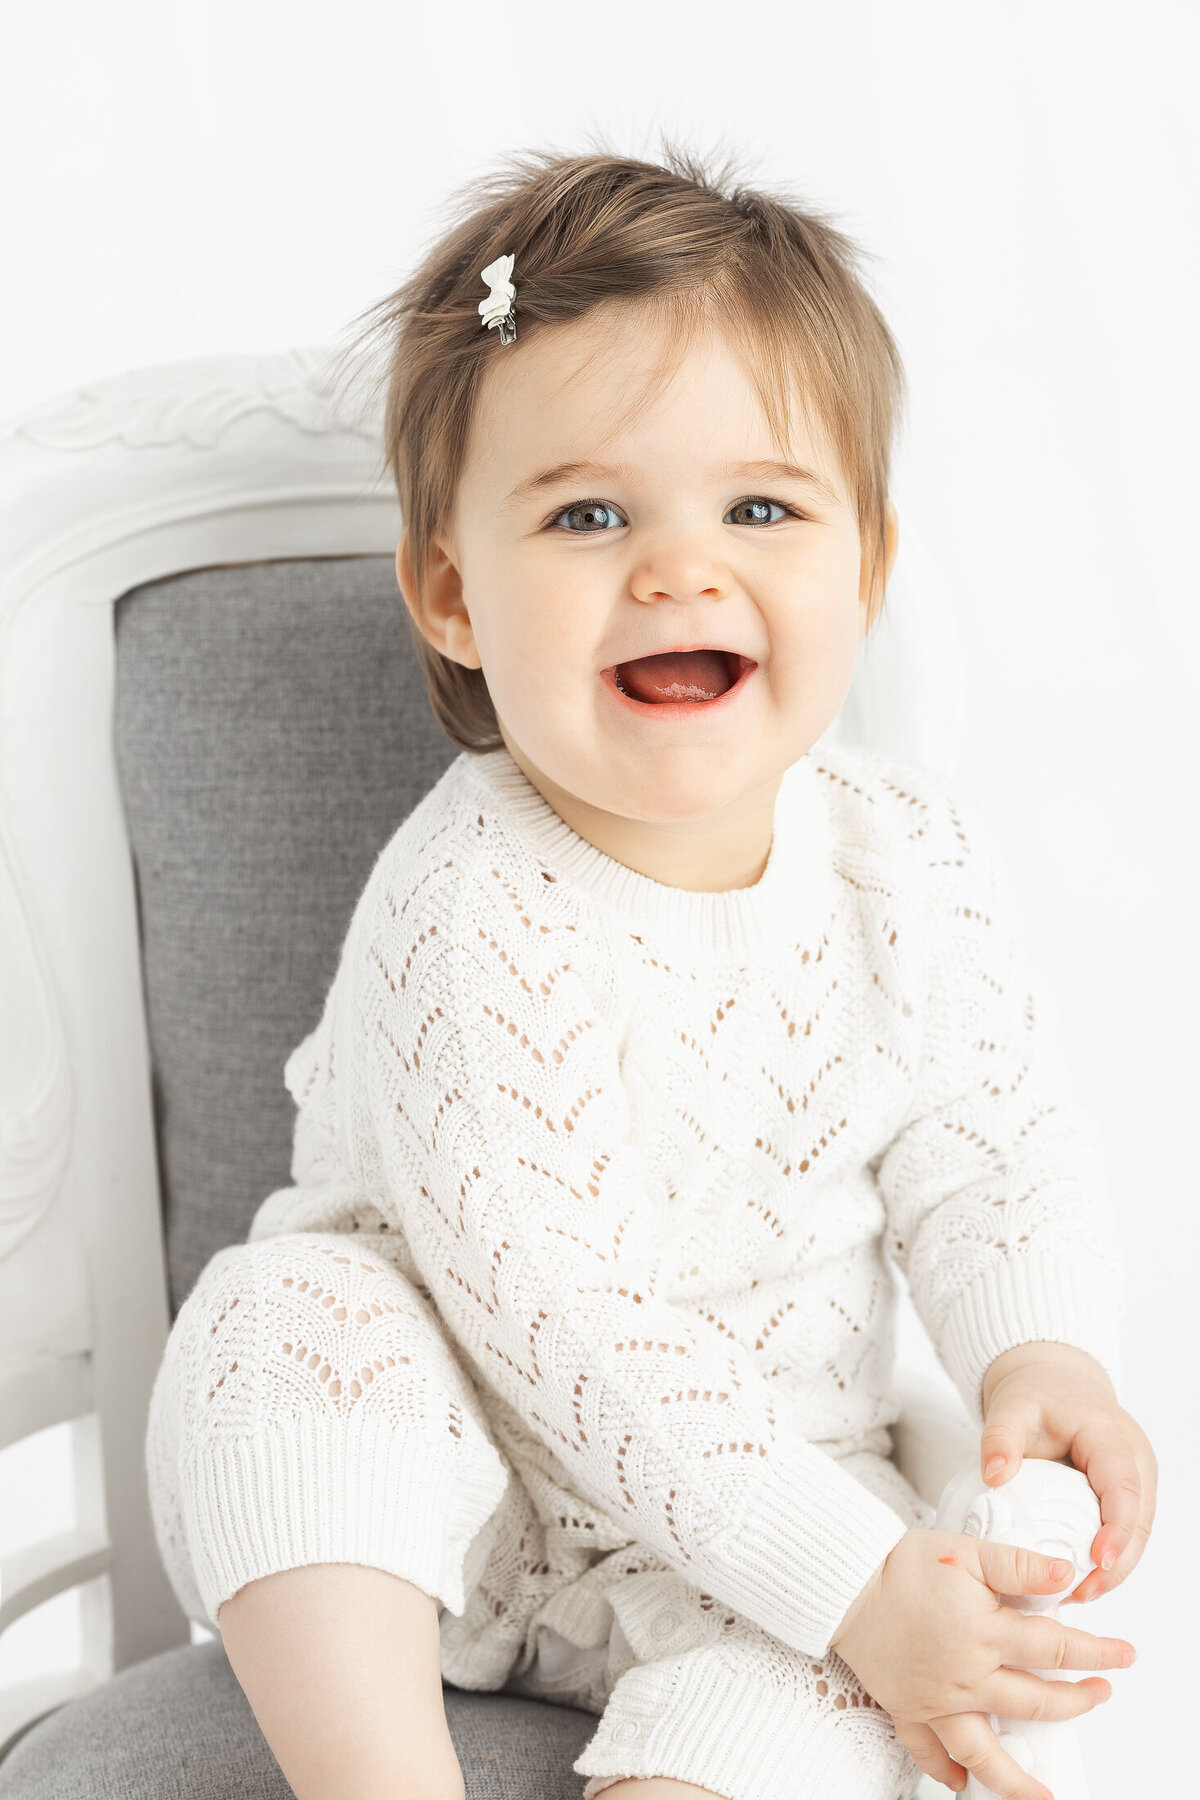 Baby smiling during cakesmash photoshoot by hobart photographer Lauren Vanier Photography